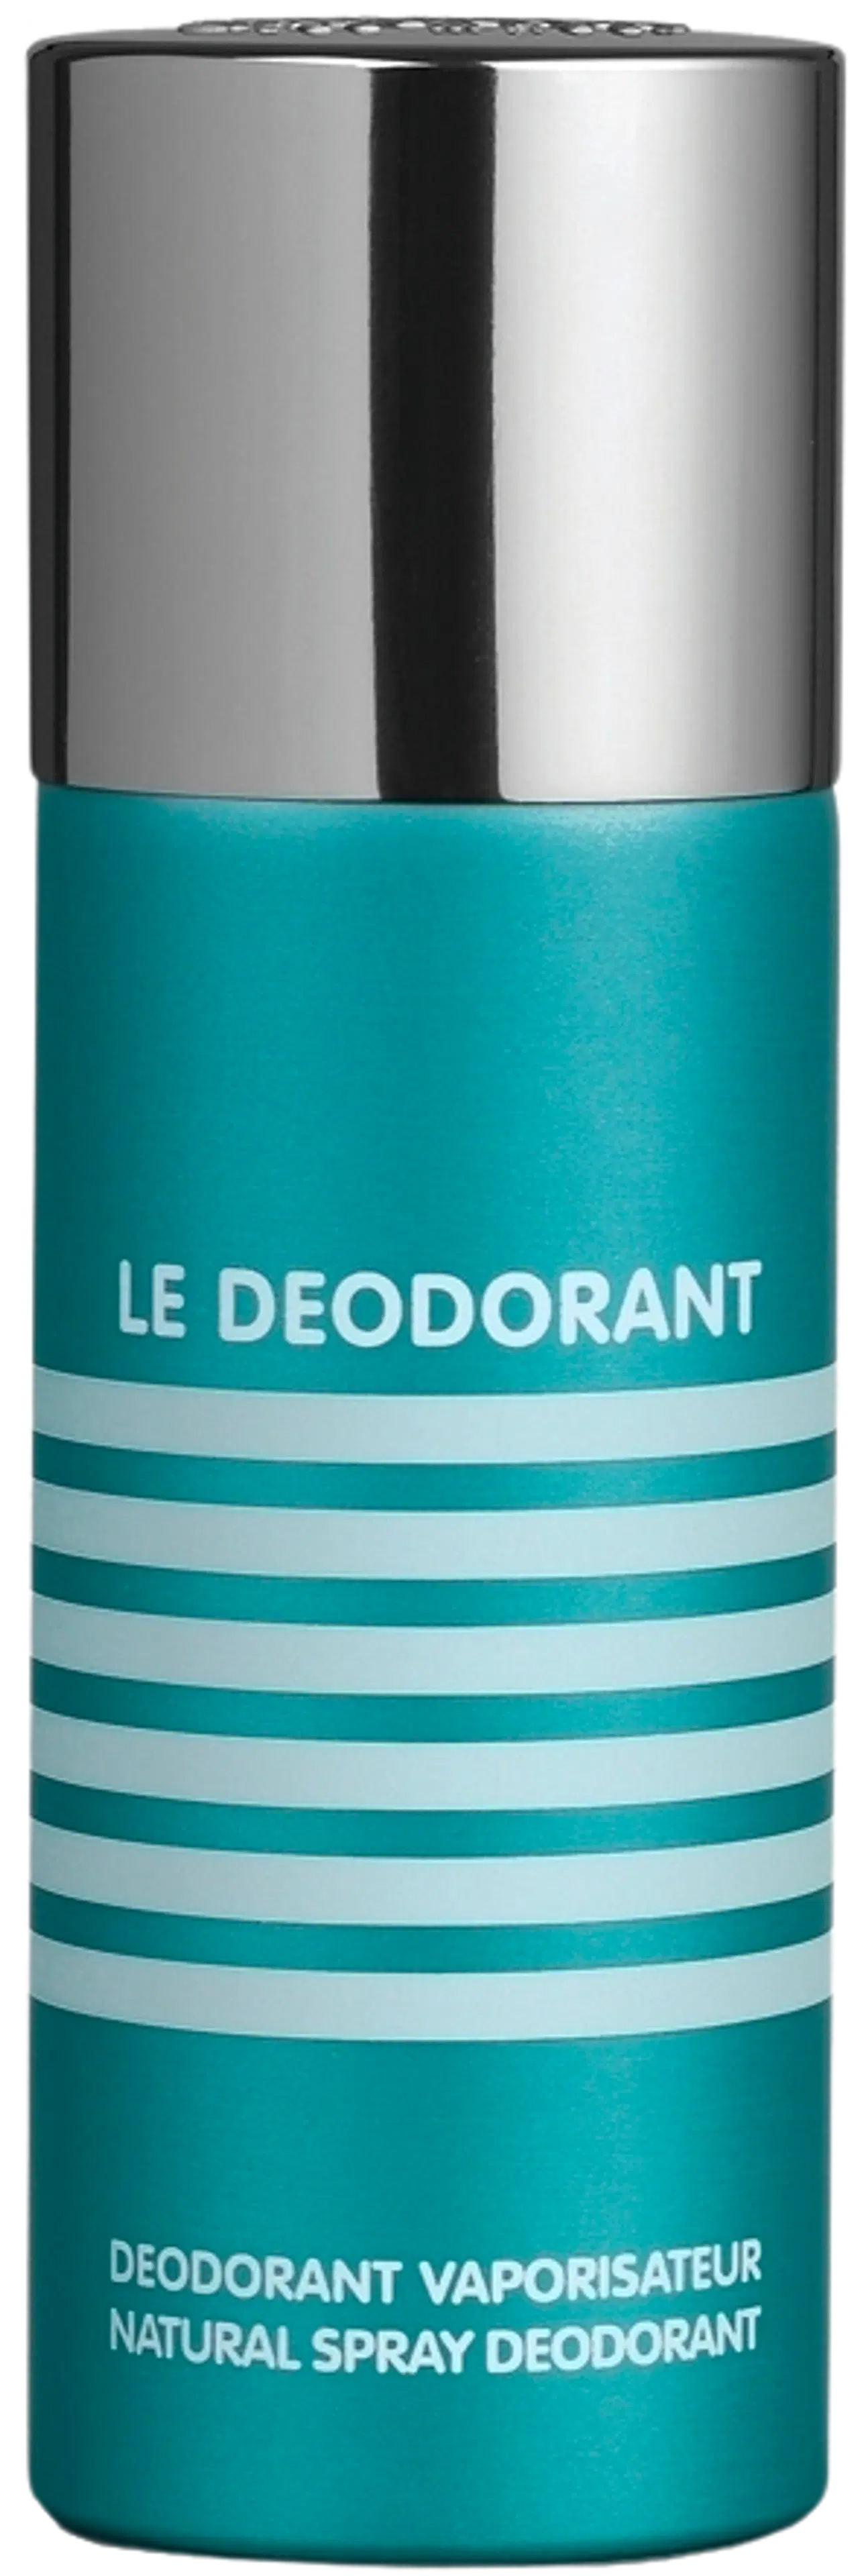 Jean Paul Gaultier Le Male Spray deodorantti 150 ml